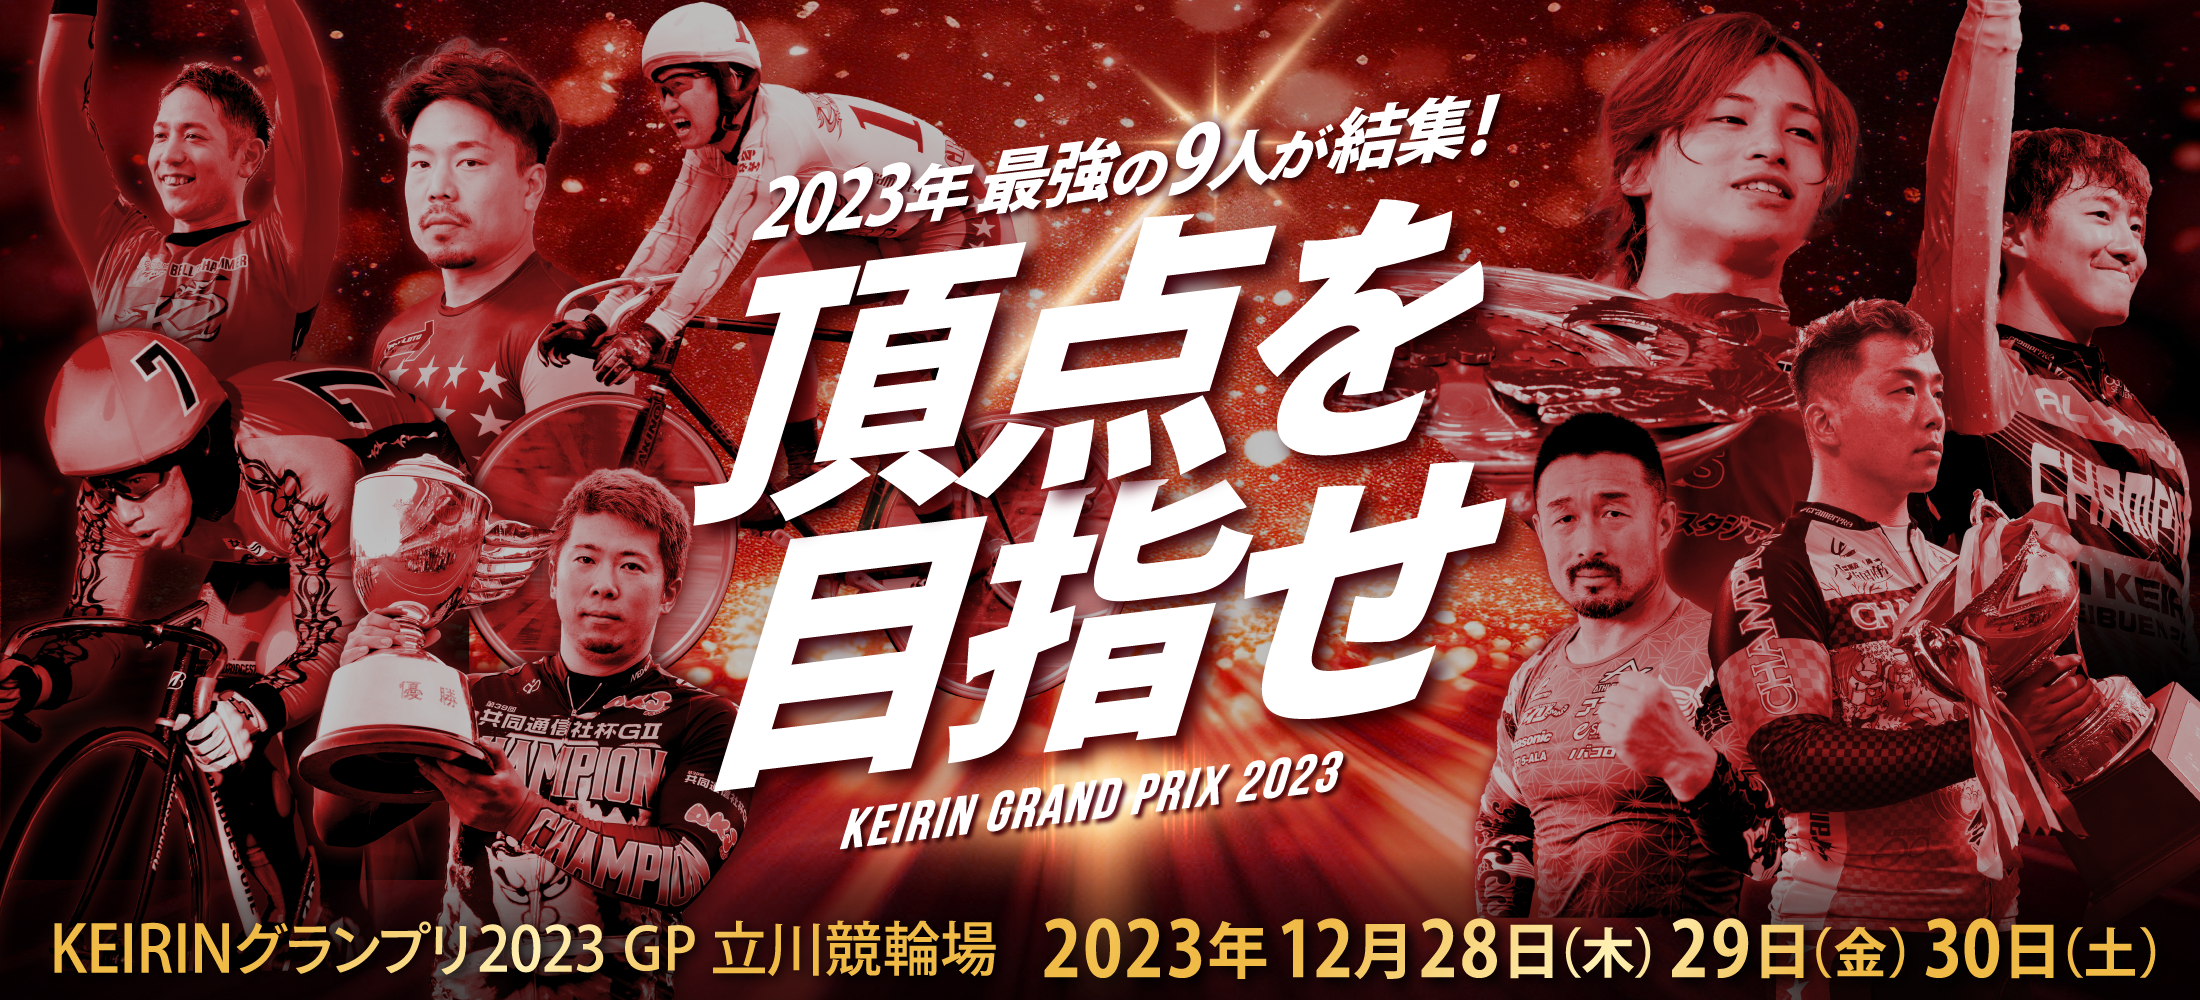 KEIRINグランプリ2023 GP 立川競輪場 2023年 12月28日(木), 29(金), 30(土)